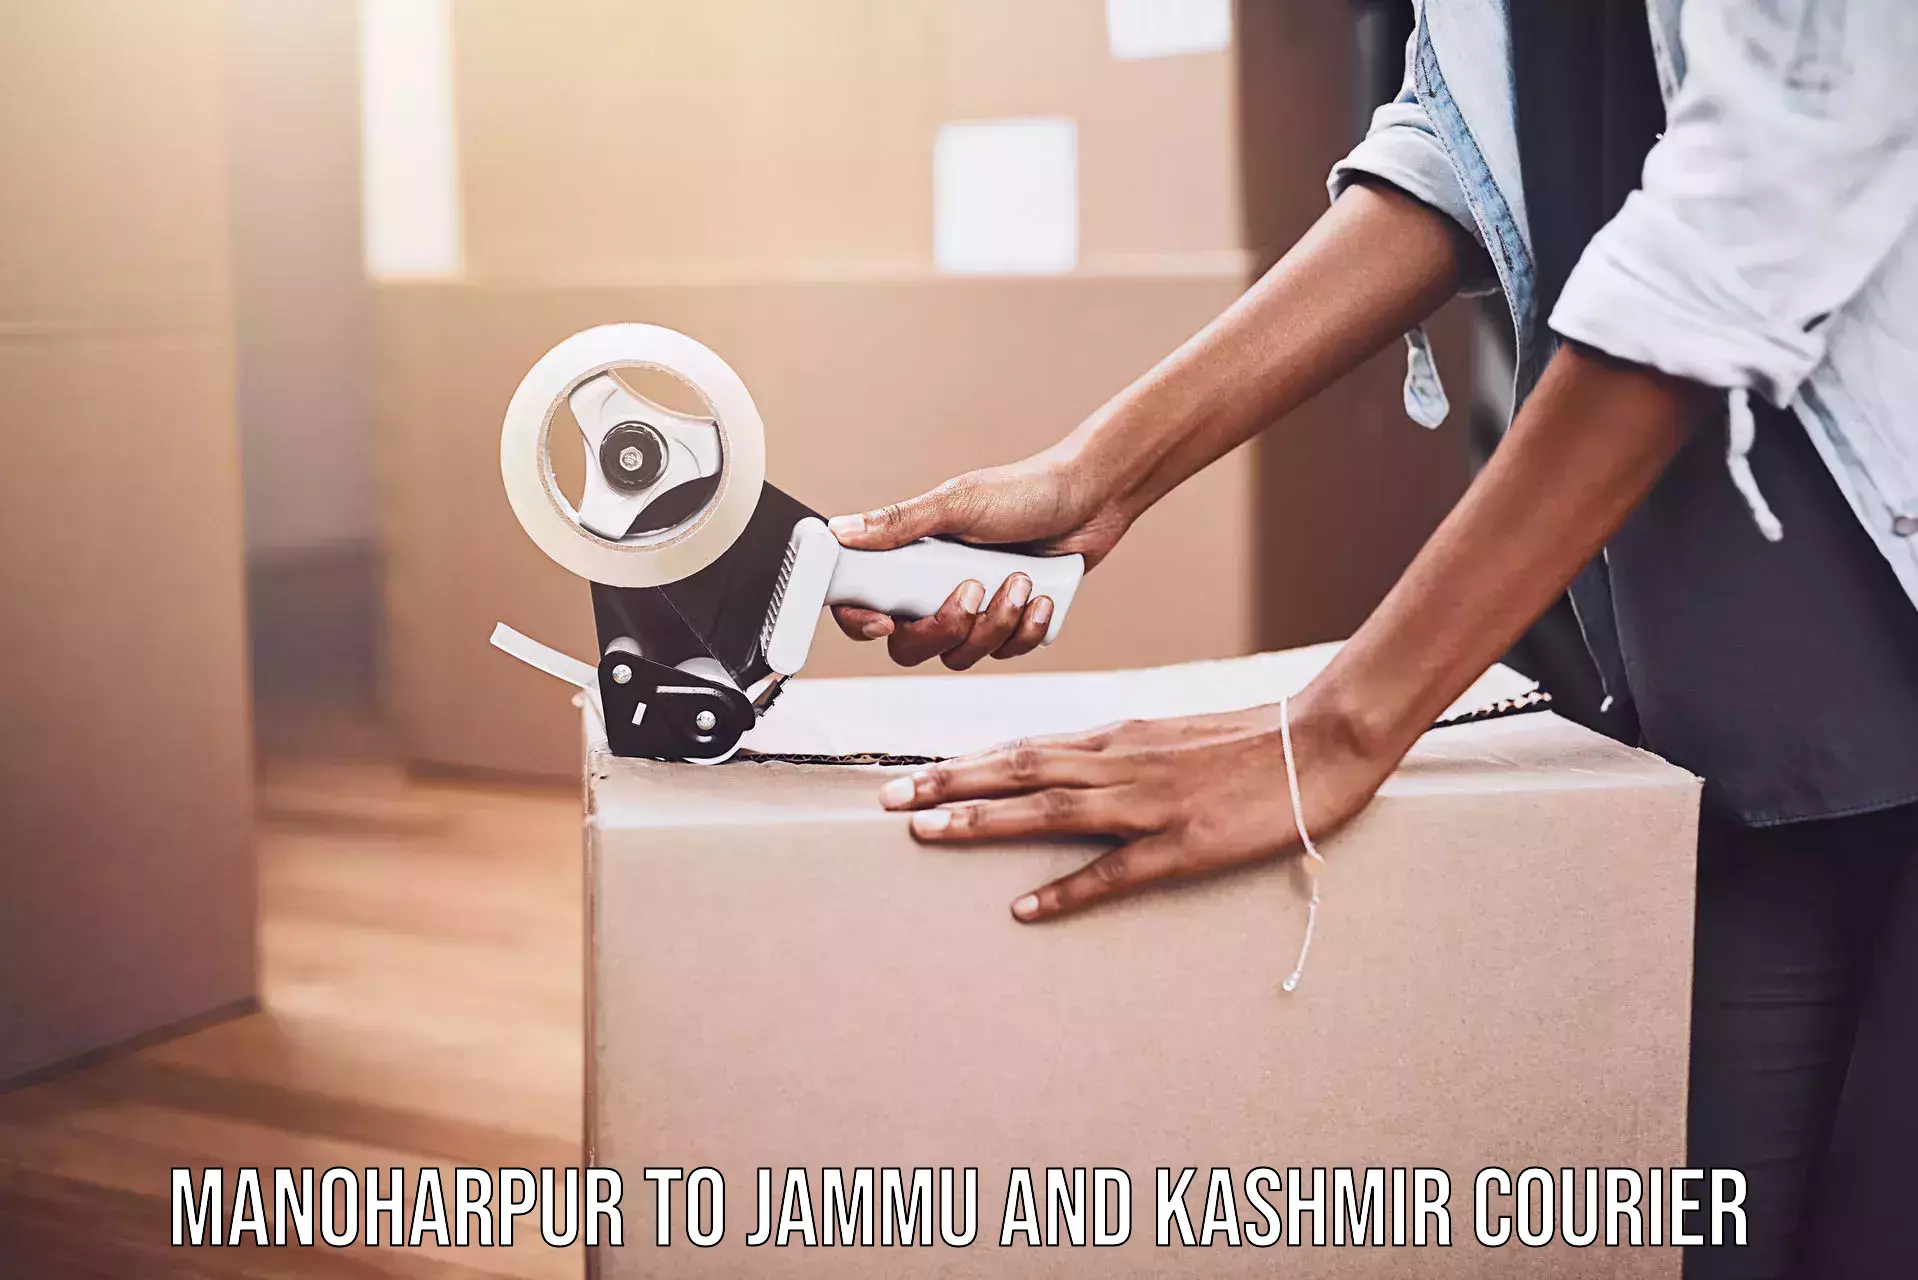 Courier service partnerships Manoharpur to Srinagar Kashmir